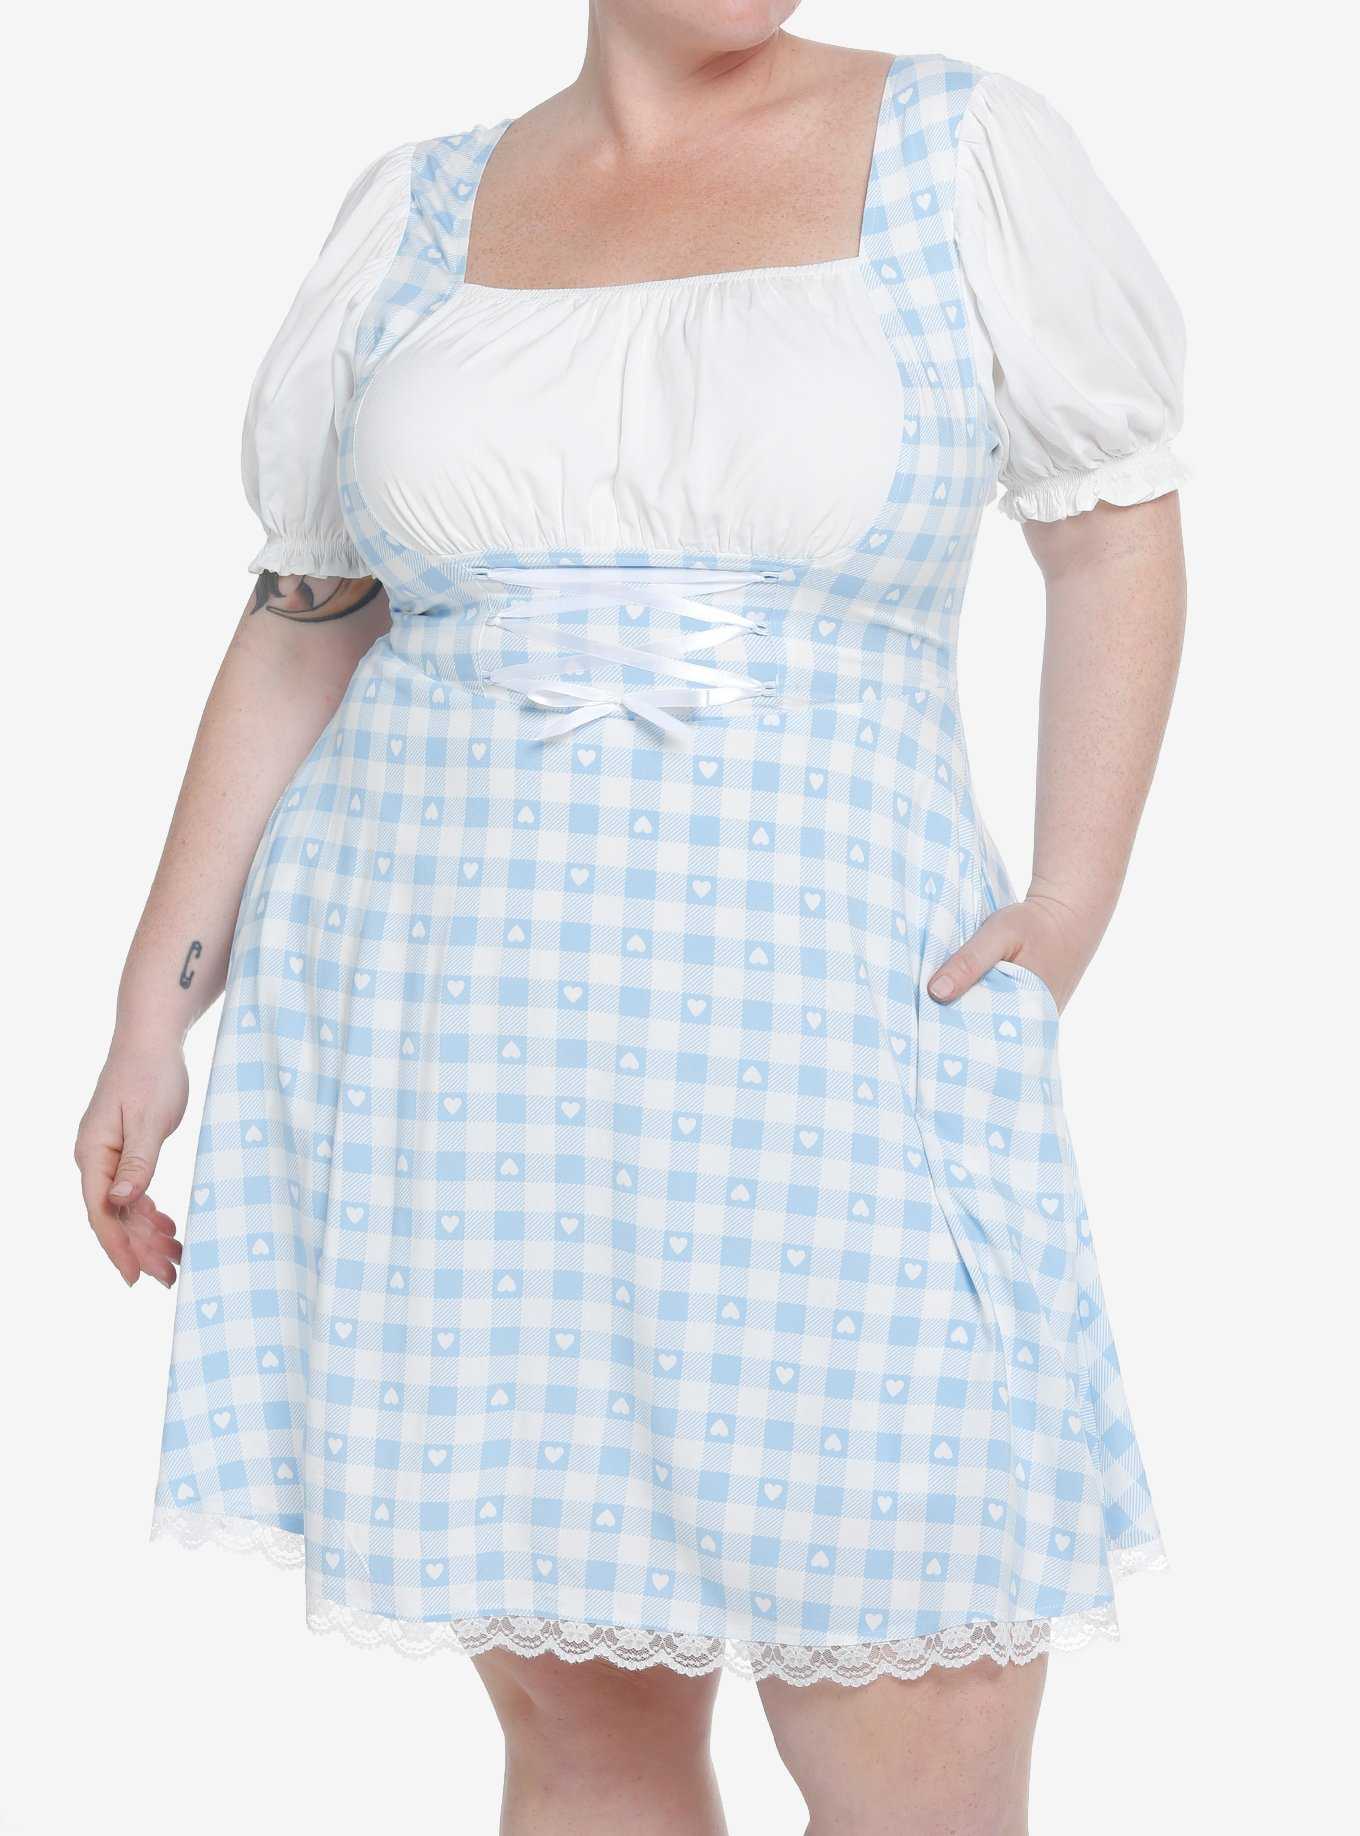 Sweet Society Blue & White Gingham Corset Dress Plus Size, , hi-res